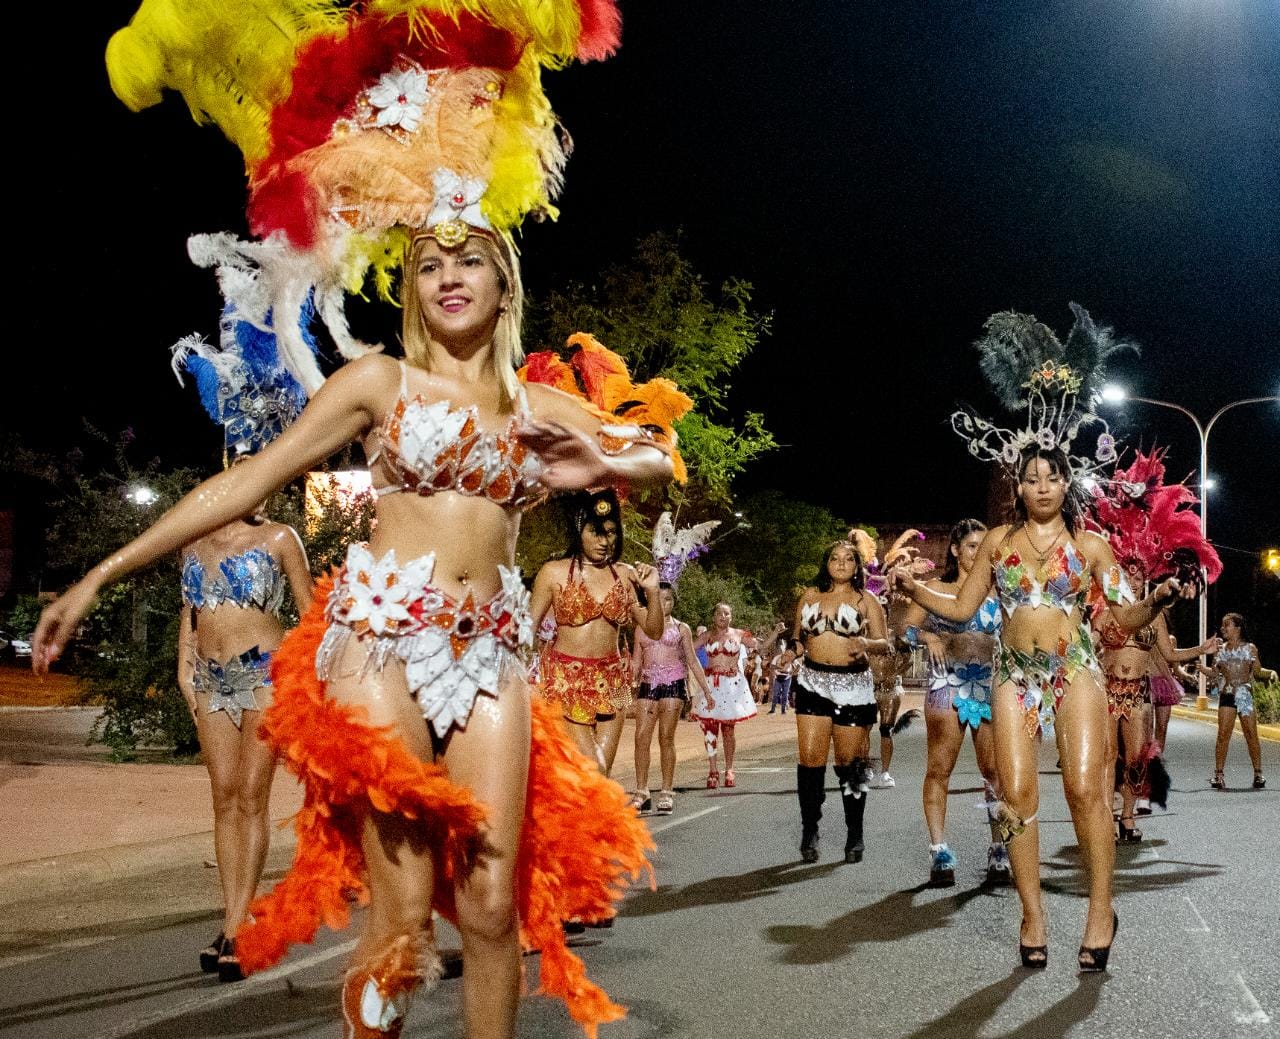 La fiebre de los Carnavales Posadeños llega a Itaembé Miní imagen-2